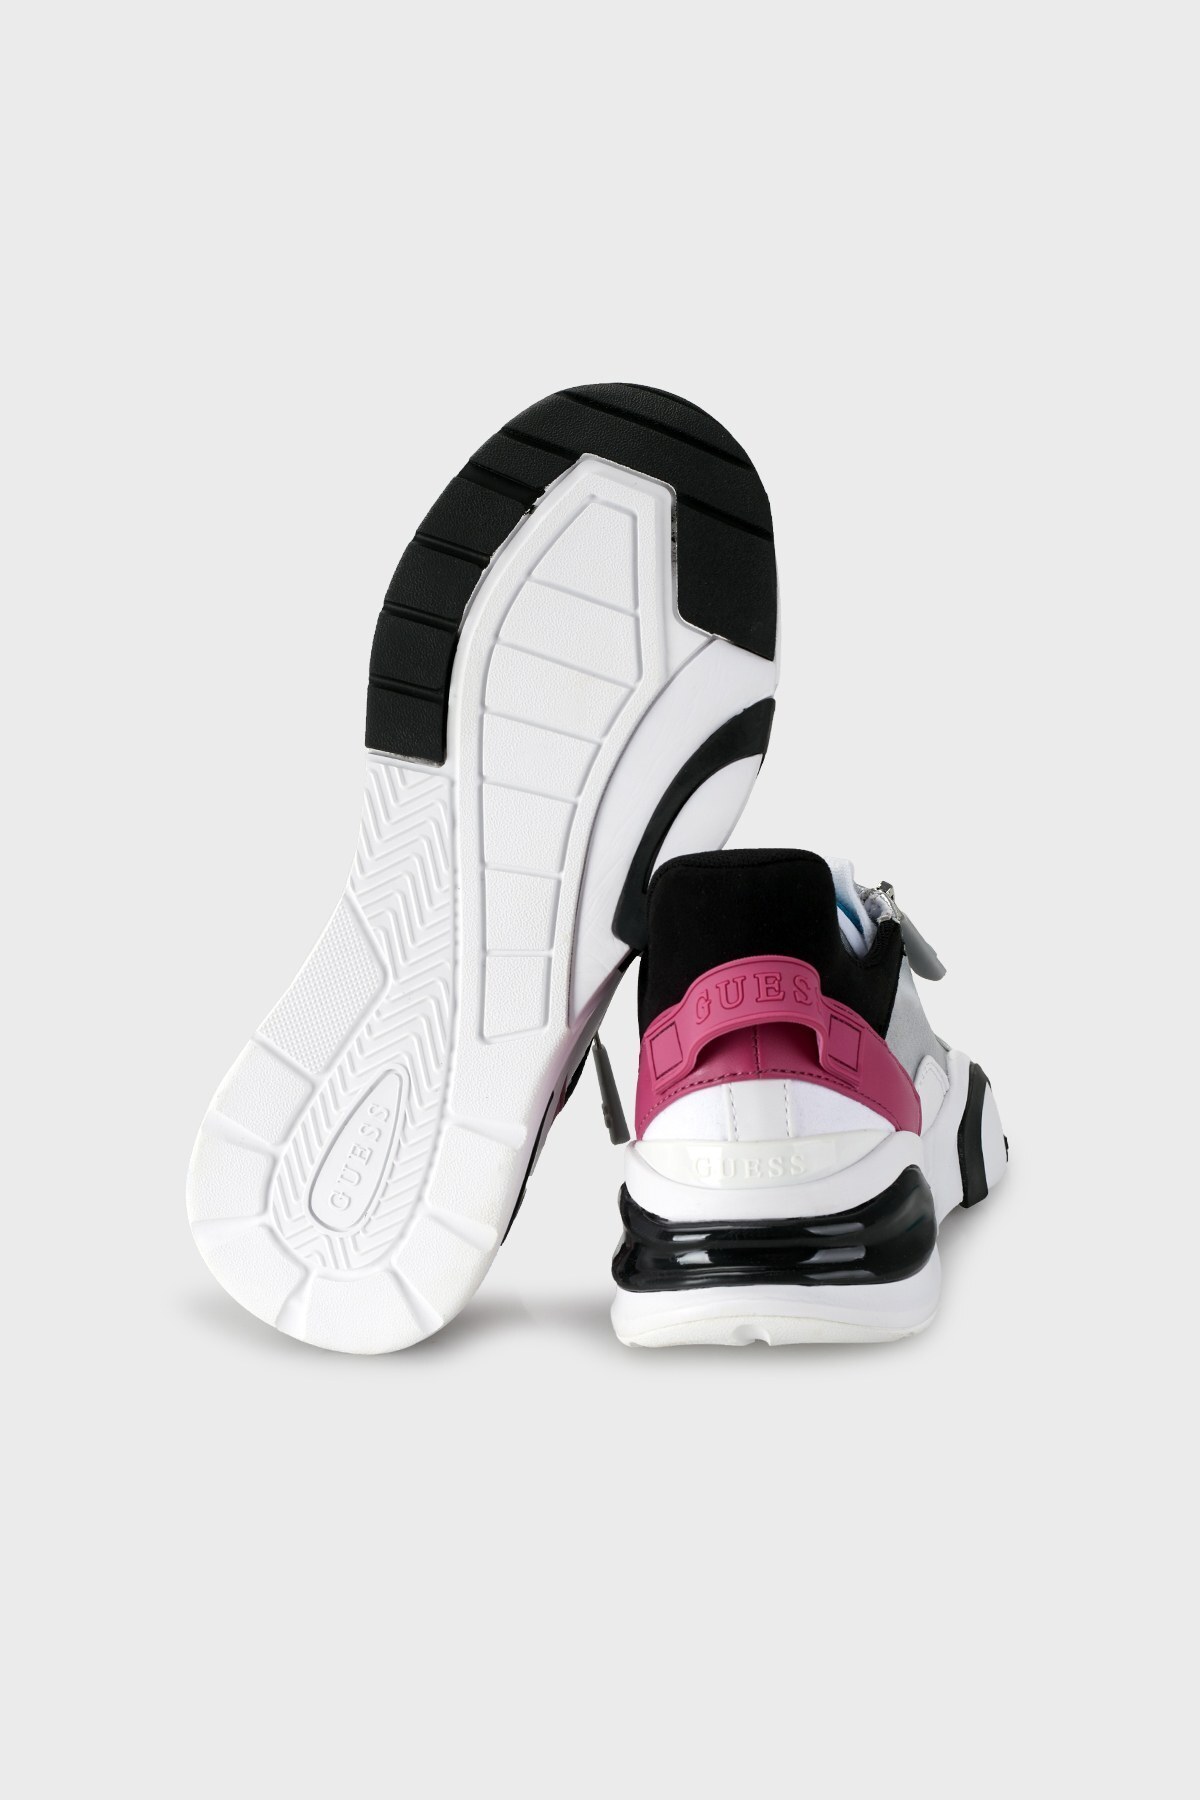 Guess Logolu Fermuar Detaylı Sneaker Bayan Ayakkabı FL8BIAFAB12 WHIFU BEYAZ-FUJYA